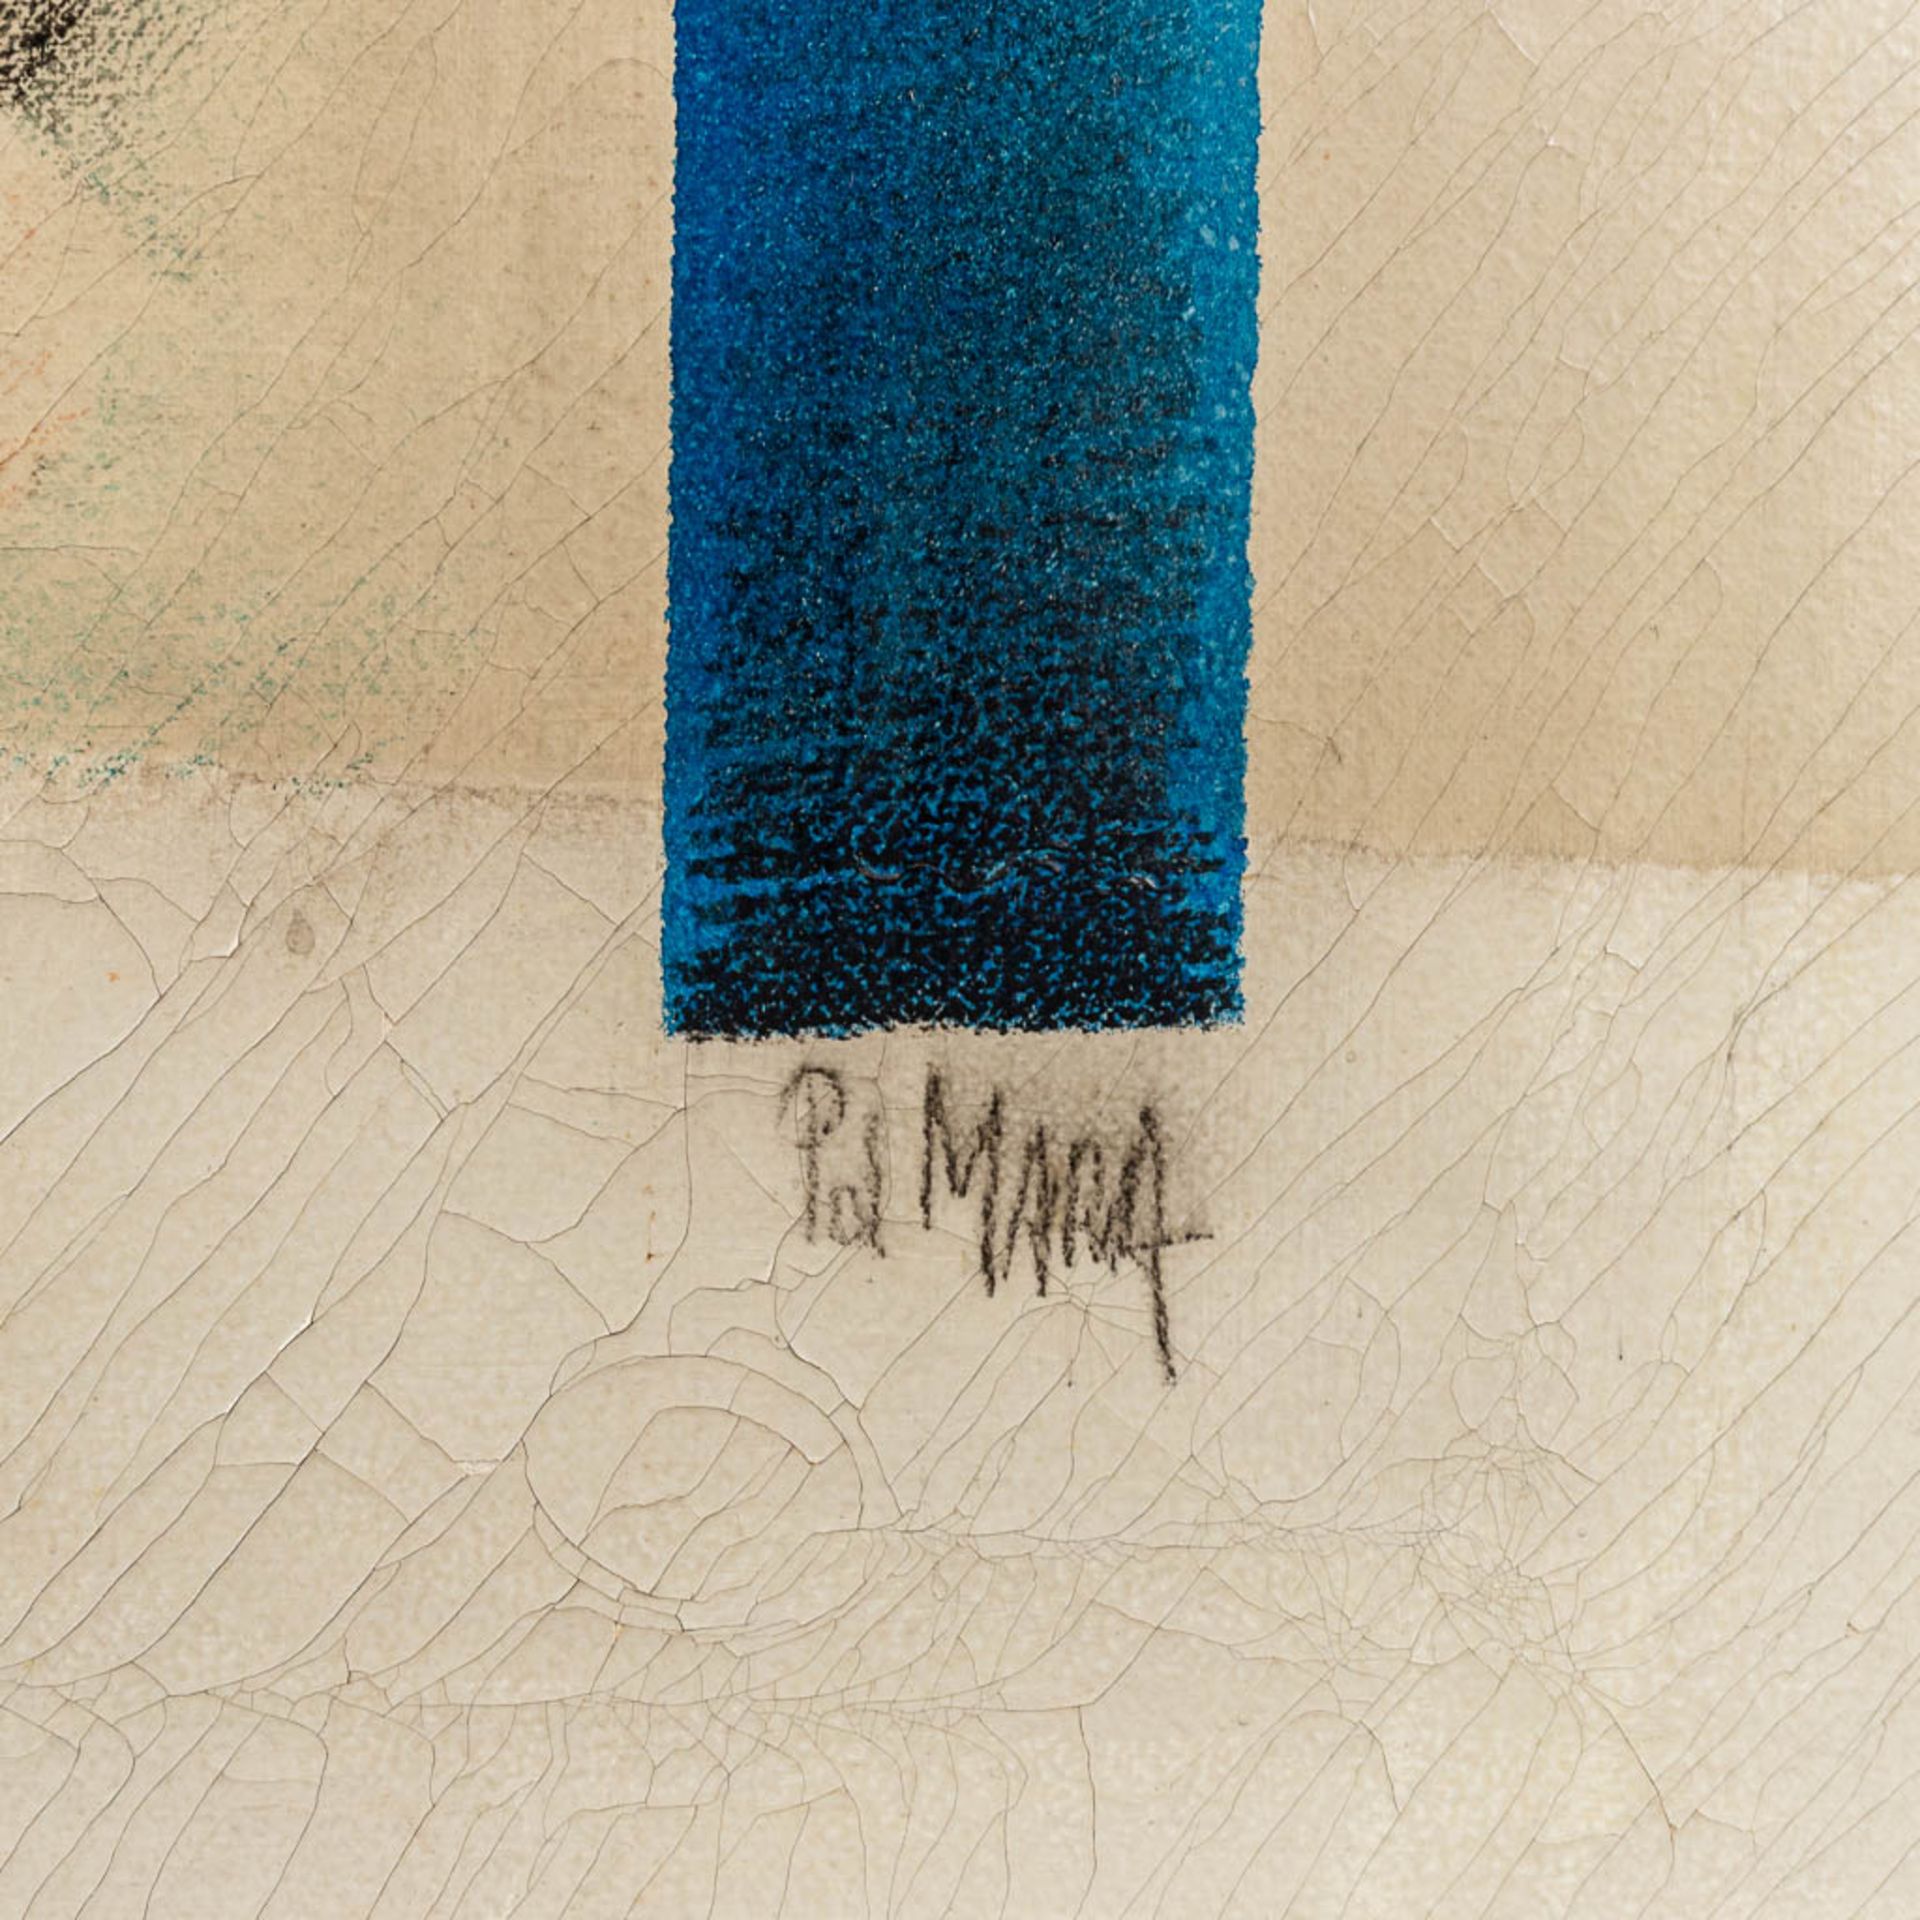 Pol MARA (1920-1998) 'Lalla Jamai(s)' oil on canvas. 1977. (W: 160 x H: 130 cm) - Image 7 of 11